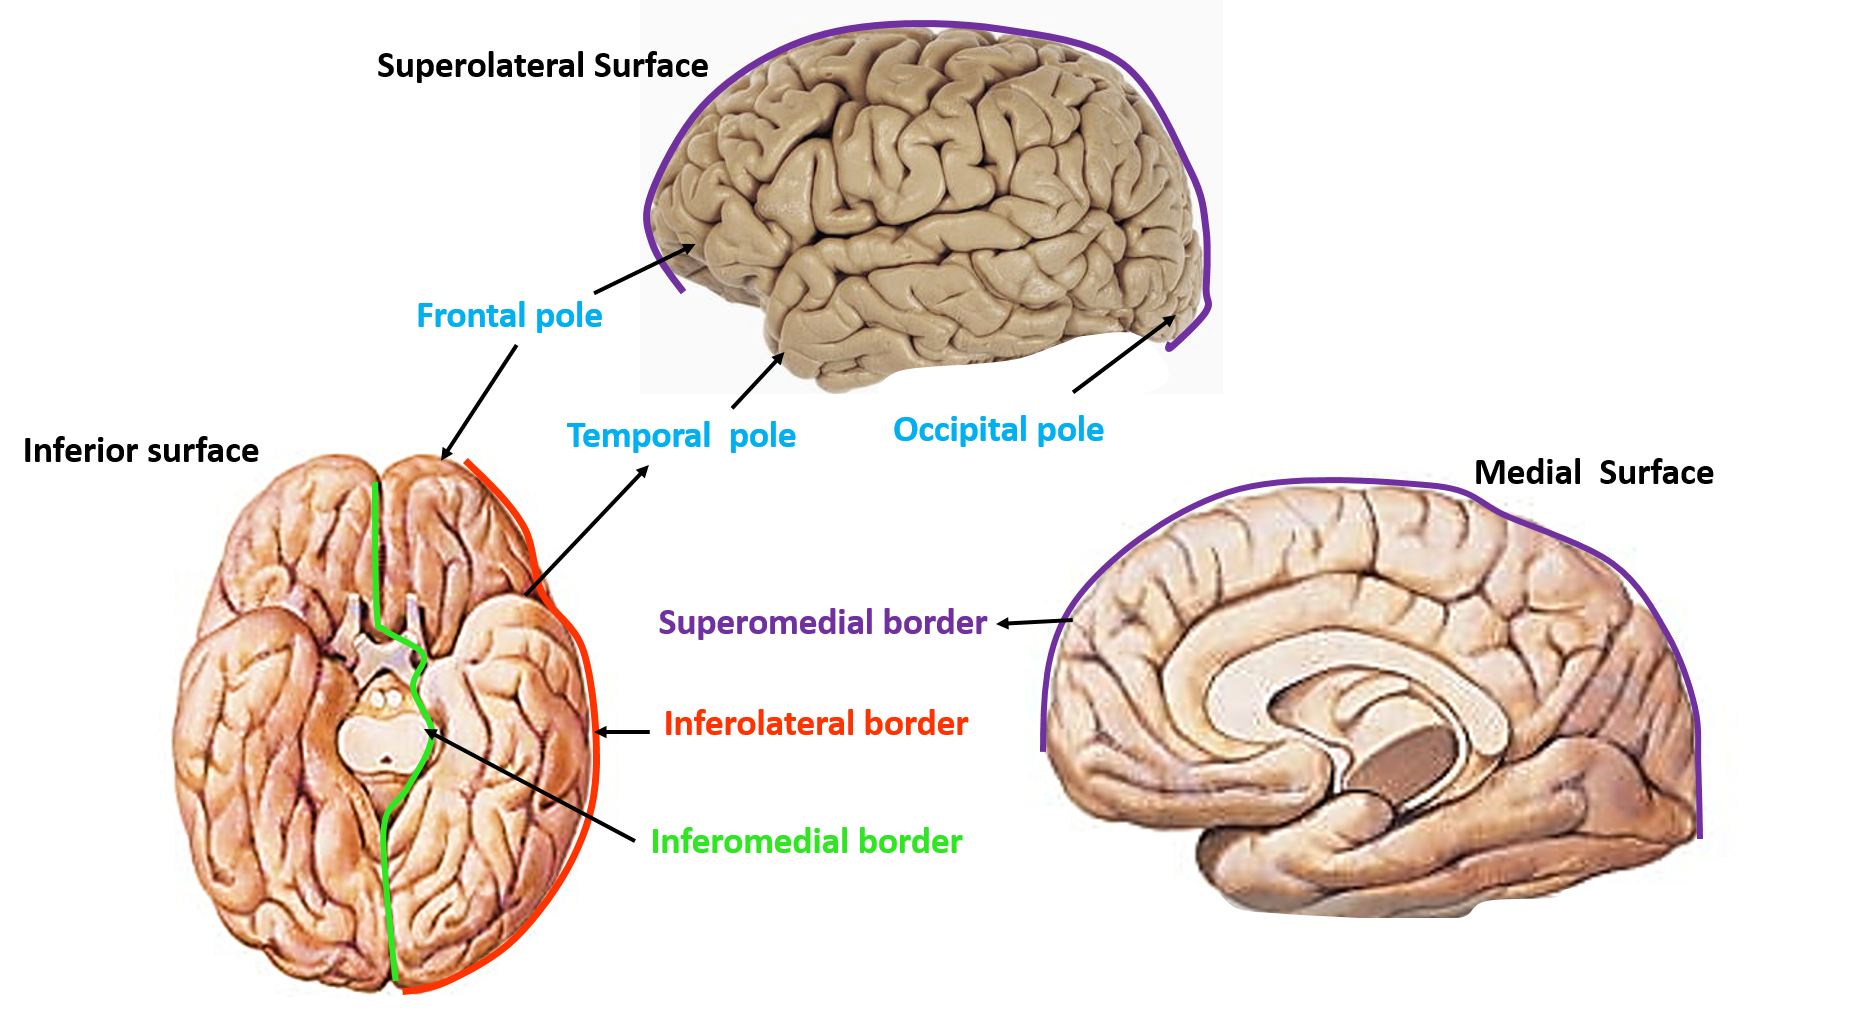 Cerebral hemisphere - poles, border and surfaces